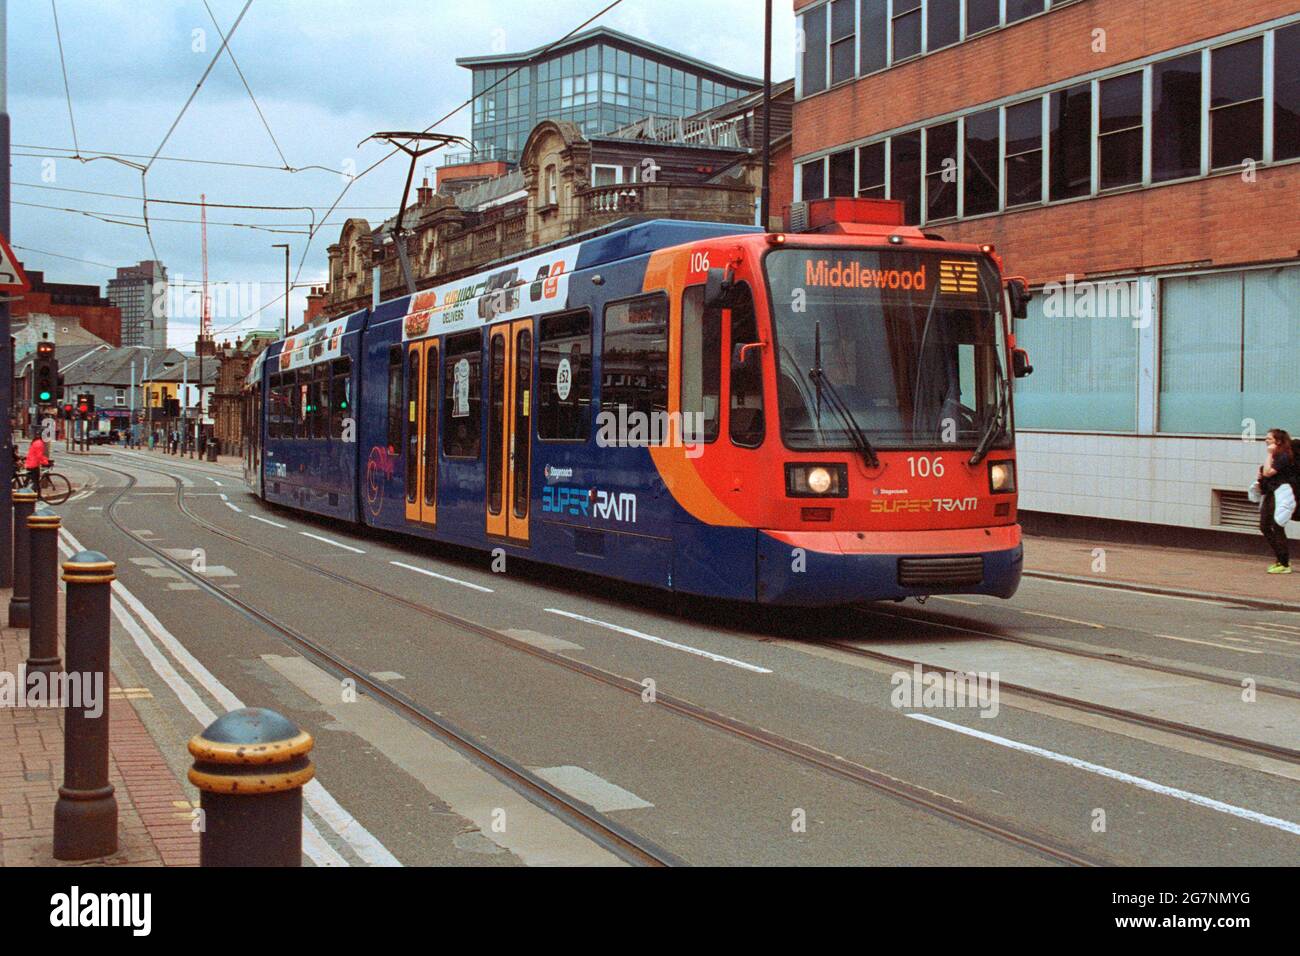 Sheffield, UK - 22 May 2021: A tram on the street. Stock Photo